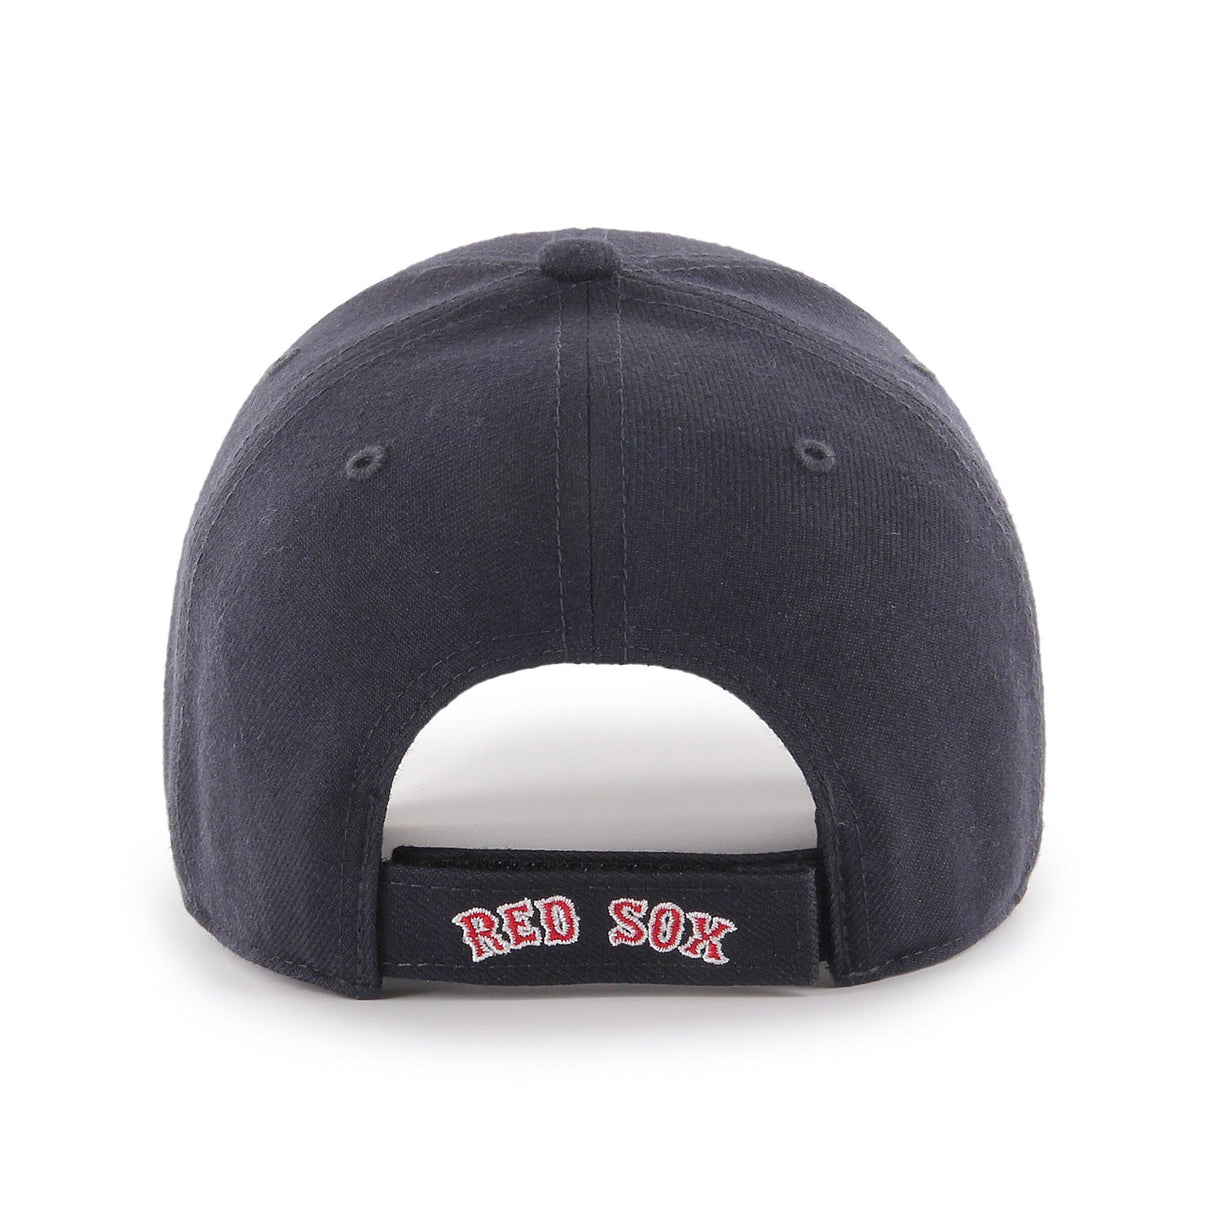 Baseball Cap - MVP Wool - Boston Red Sox - Adjustable